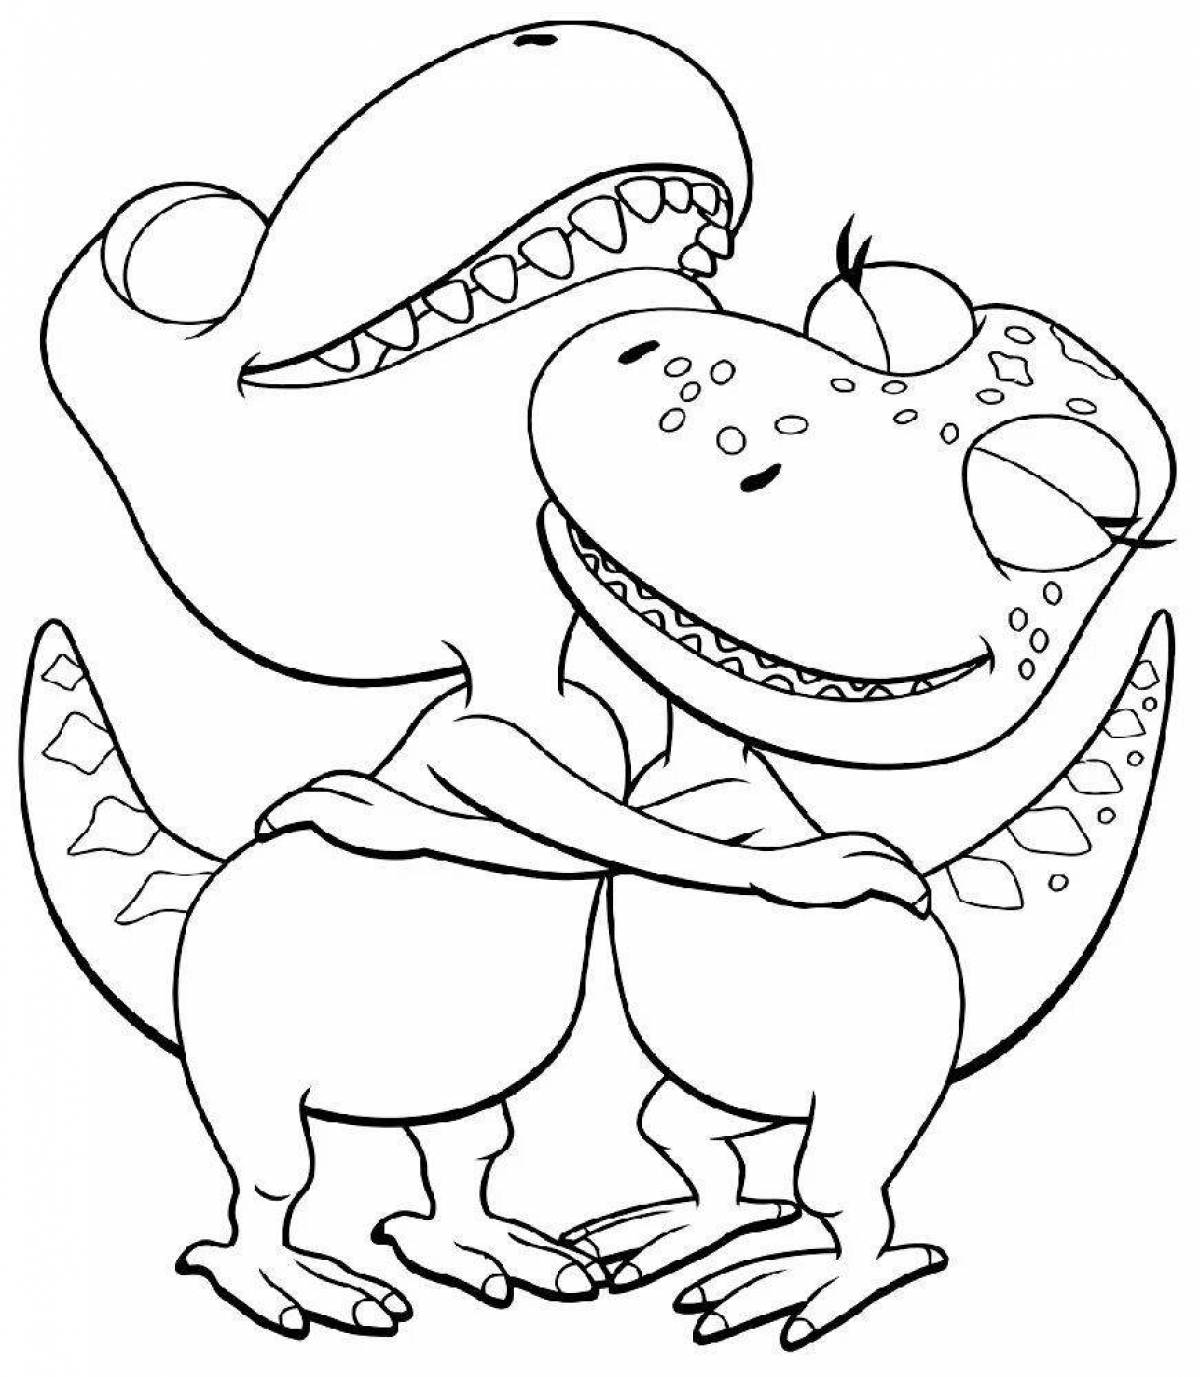 Animated cartoon dinosaur coloring book